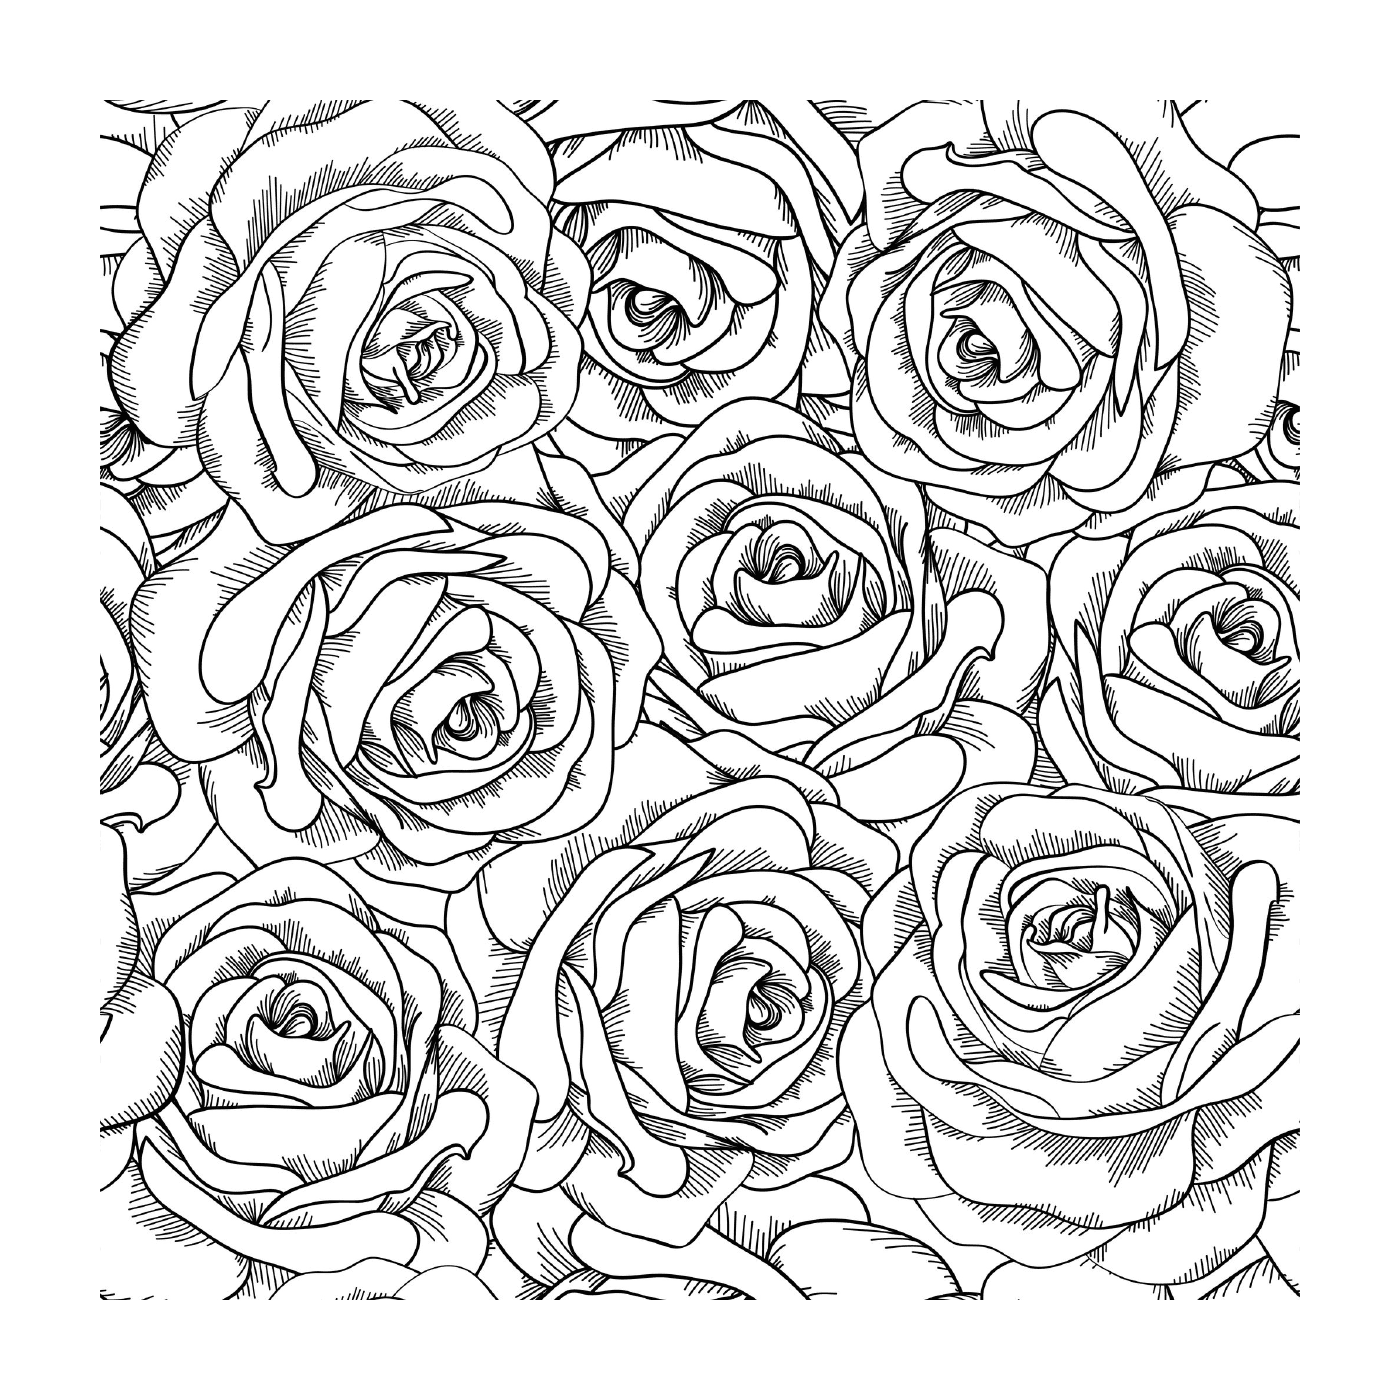  Doodle Rose, amore colorato 